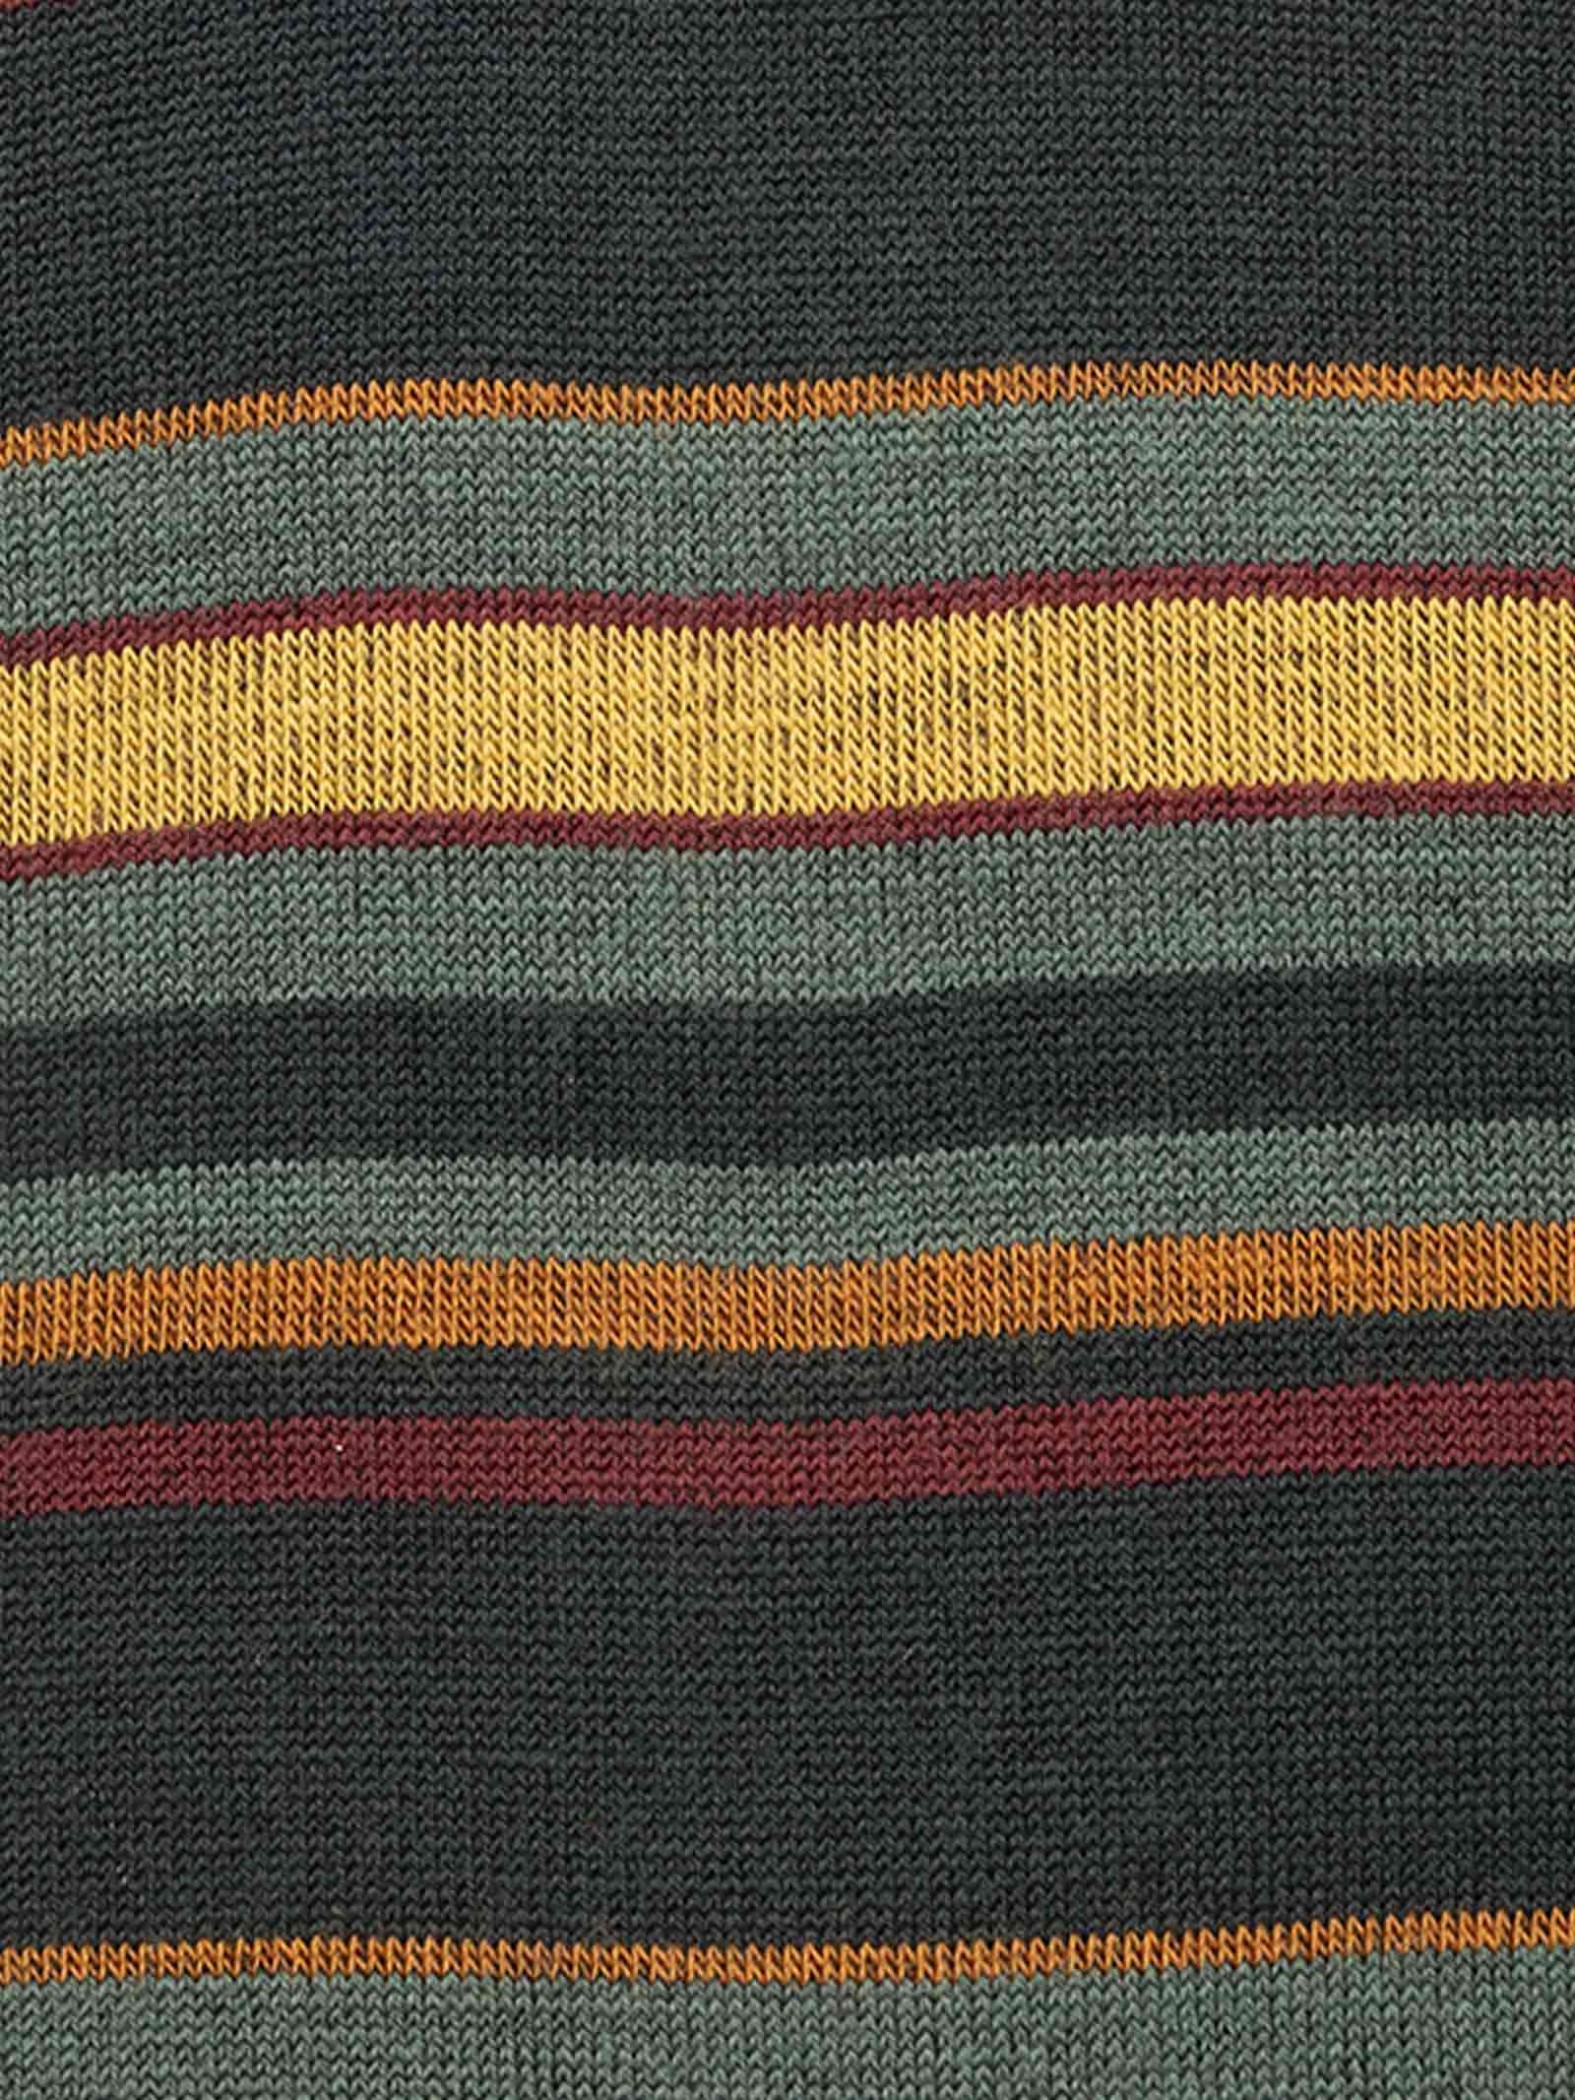 Men's long striped pattern socks in warm Cotton - Made in Italy